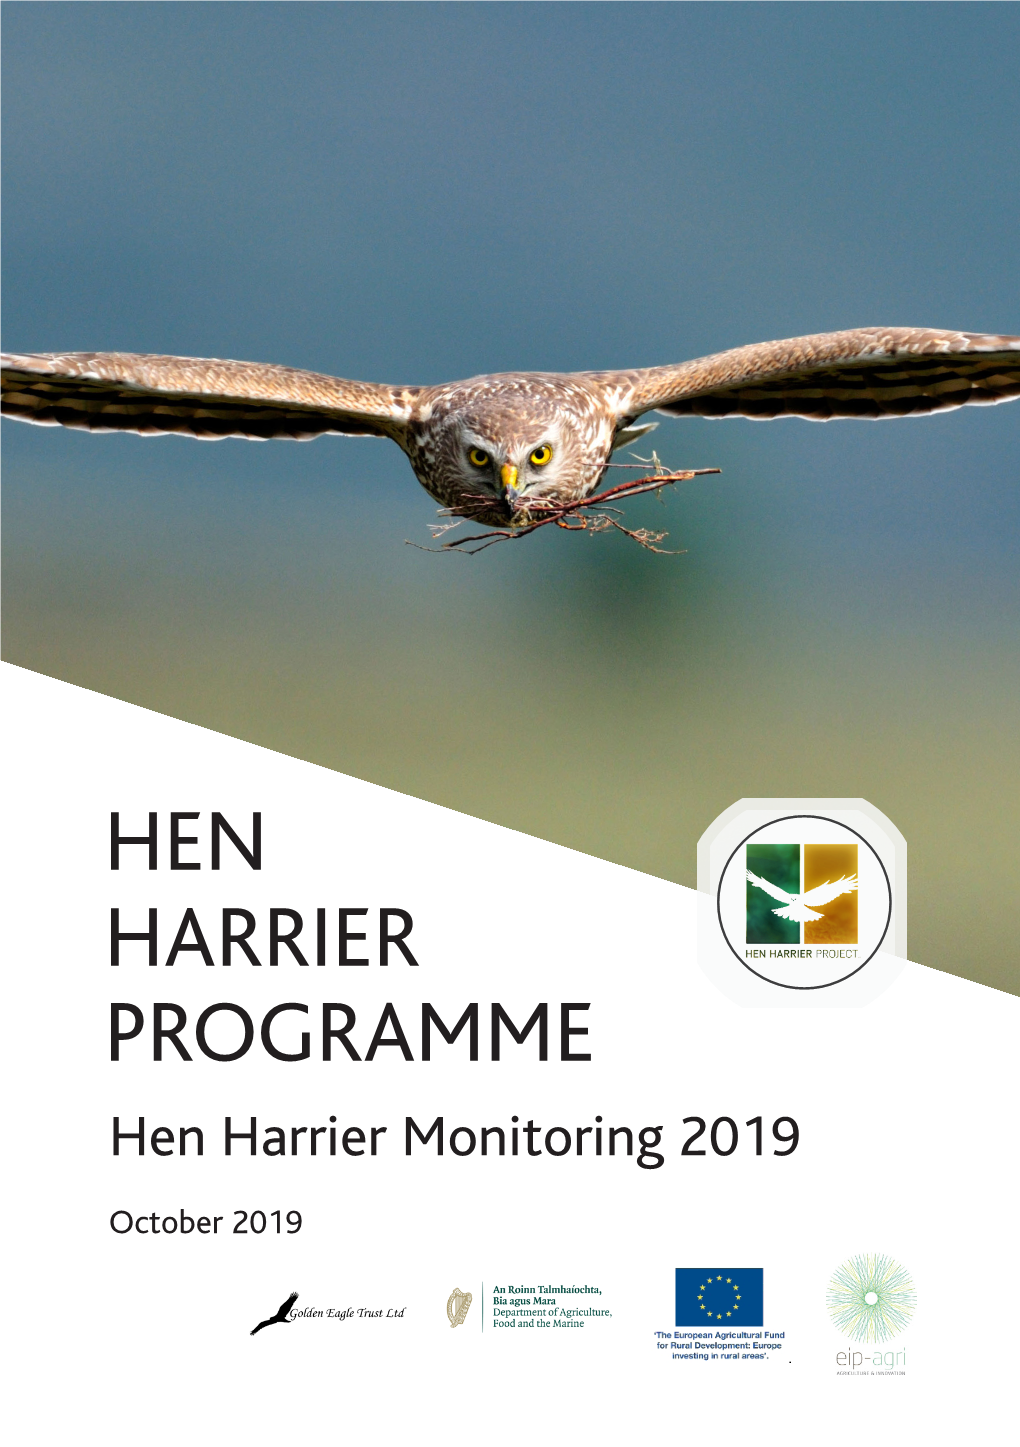 Harrier Hen Programme